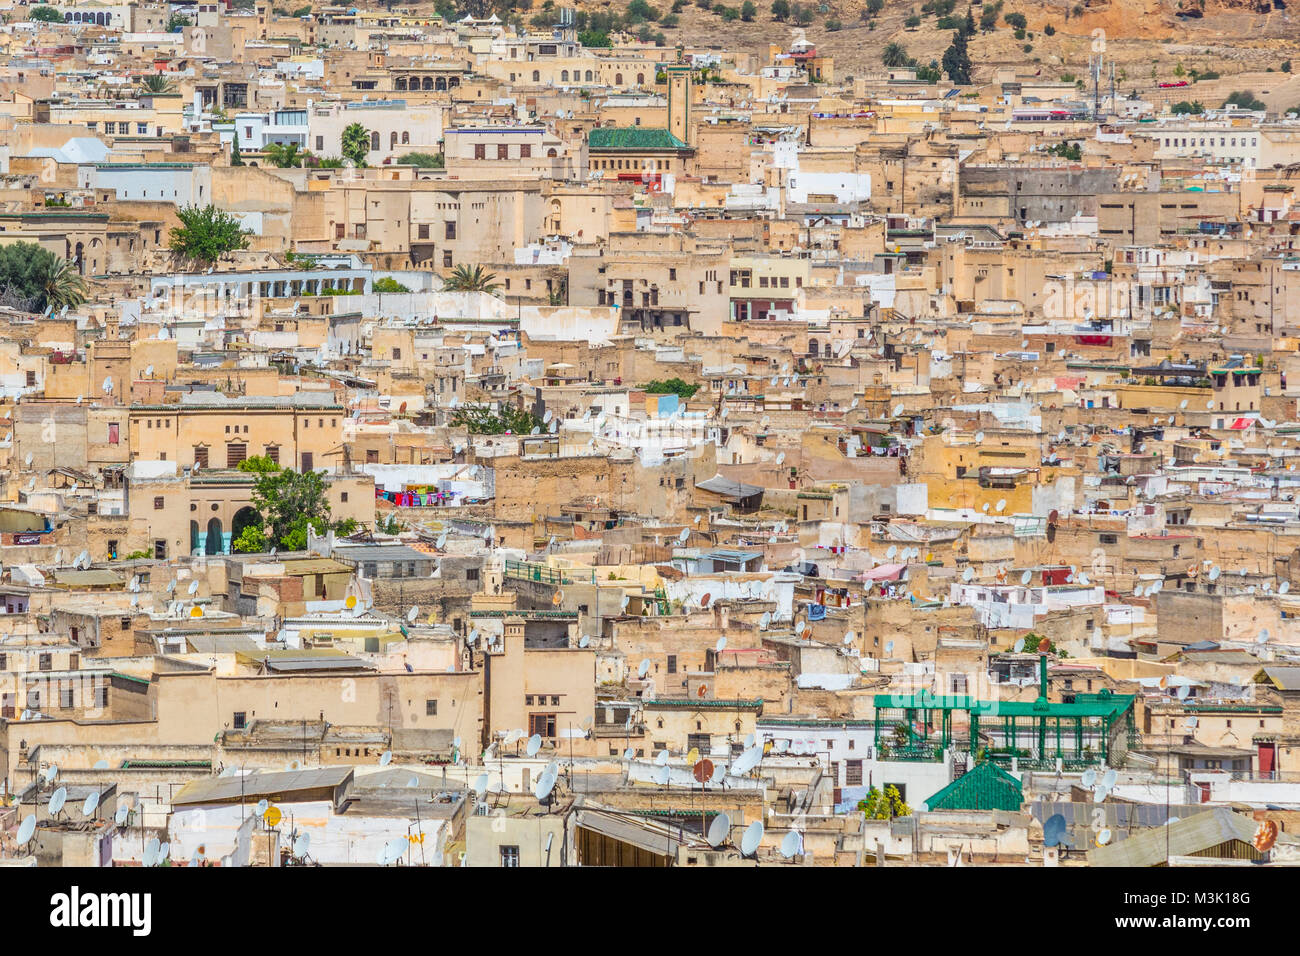 Fez city dense buildings mosaic houses Morocco Stock Photo